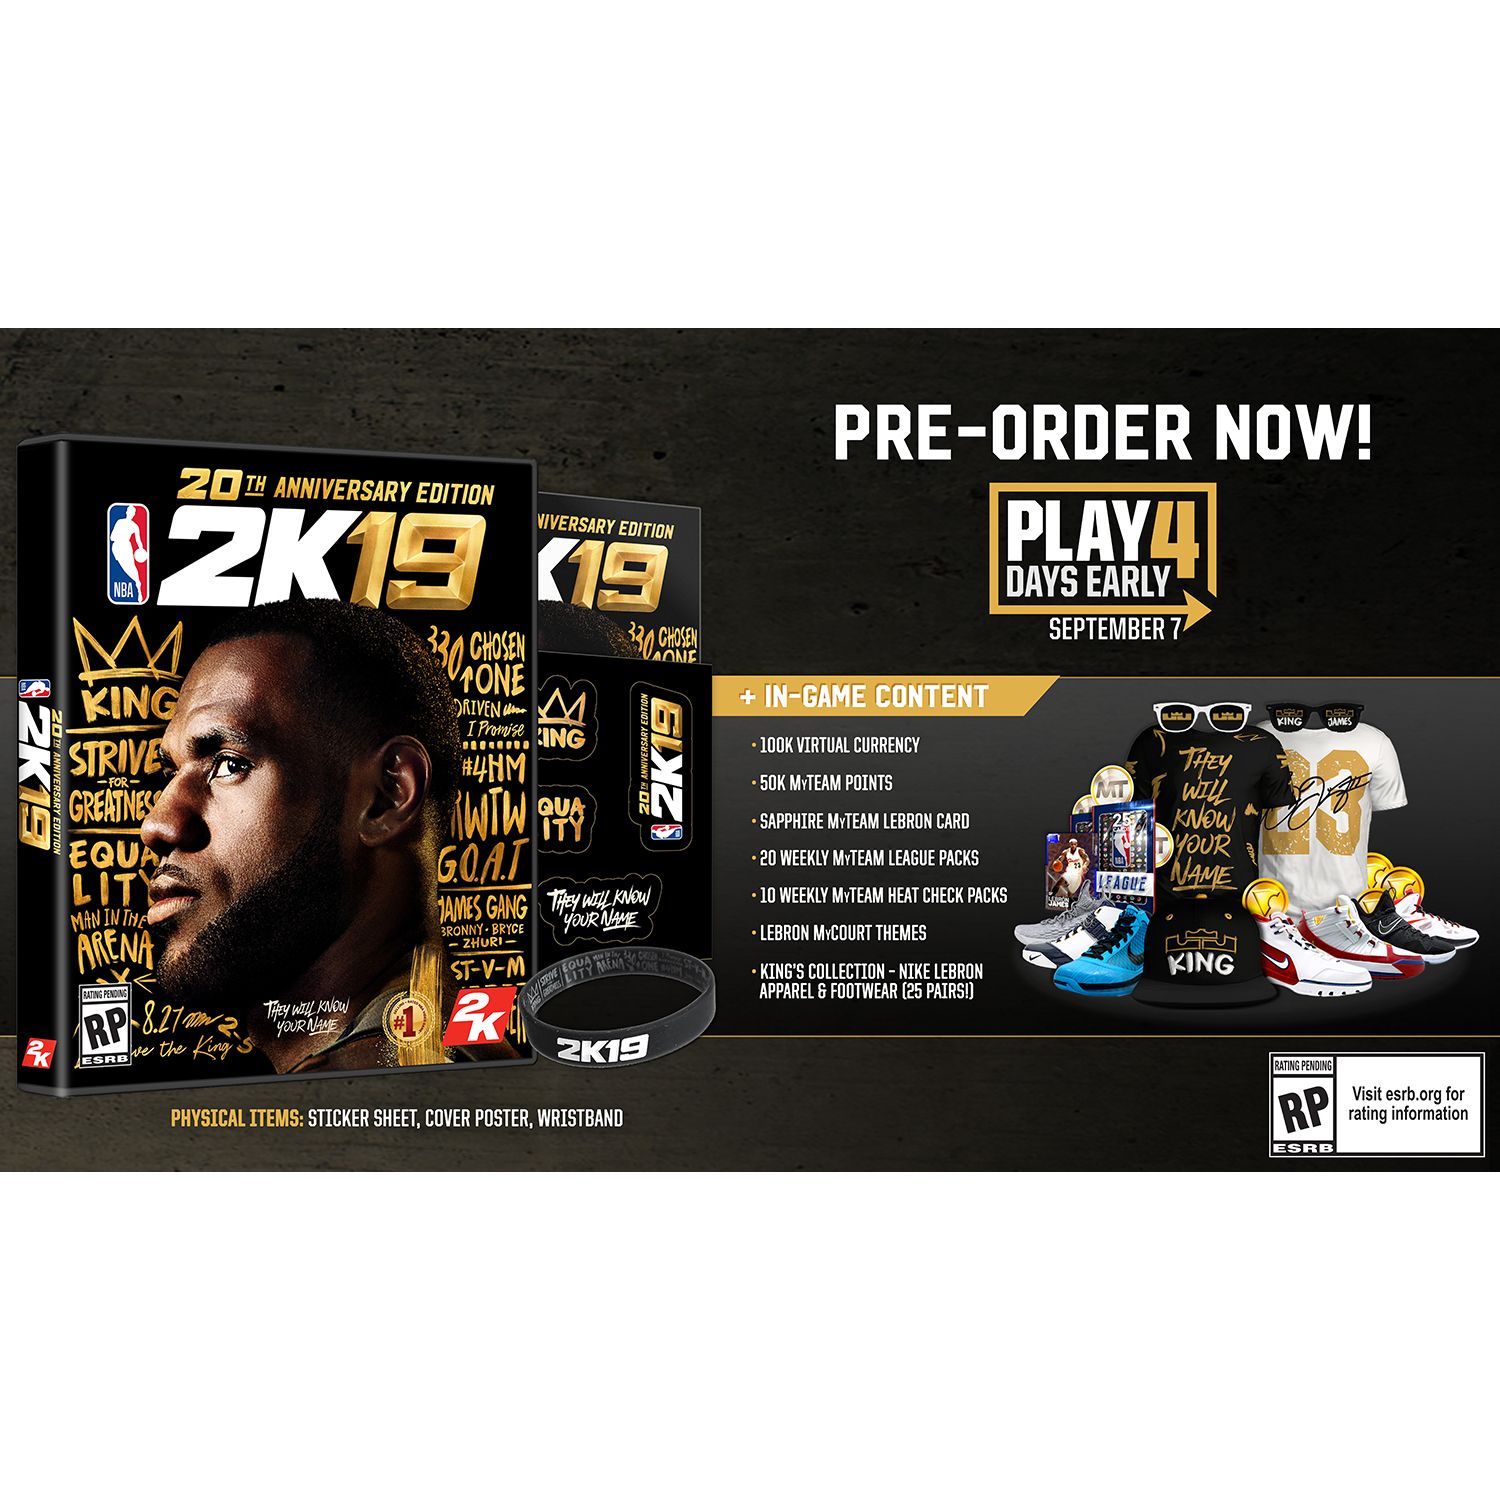 NBA 2K19 20th Anniversary Edition, 2K, PlayStation 4, 710425570612 - image 3 of 6